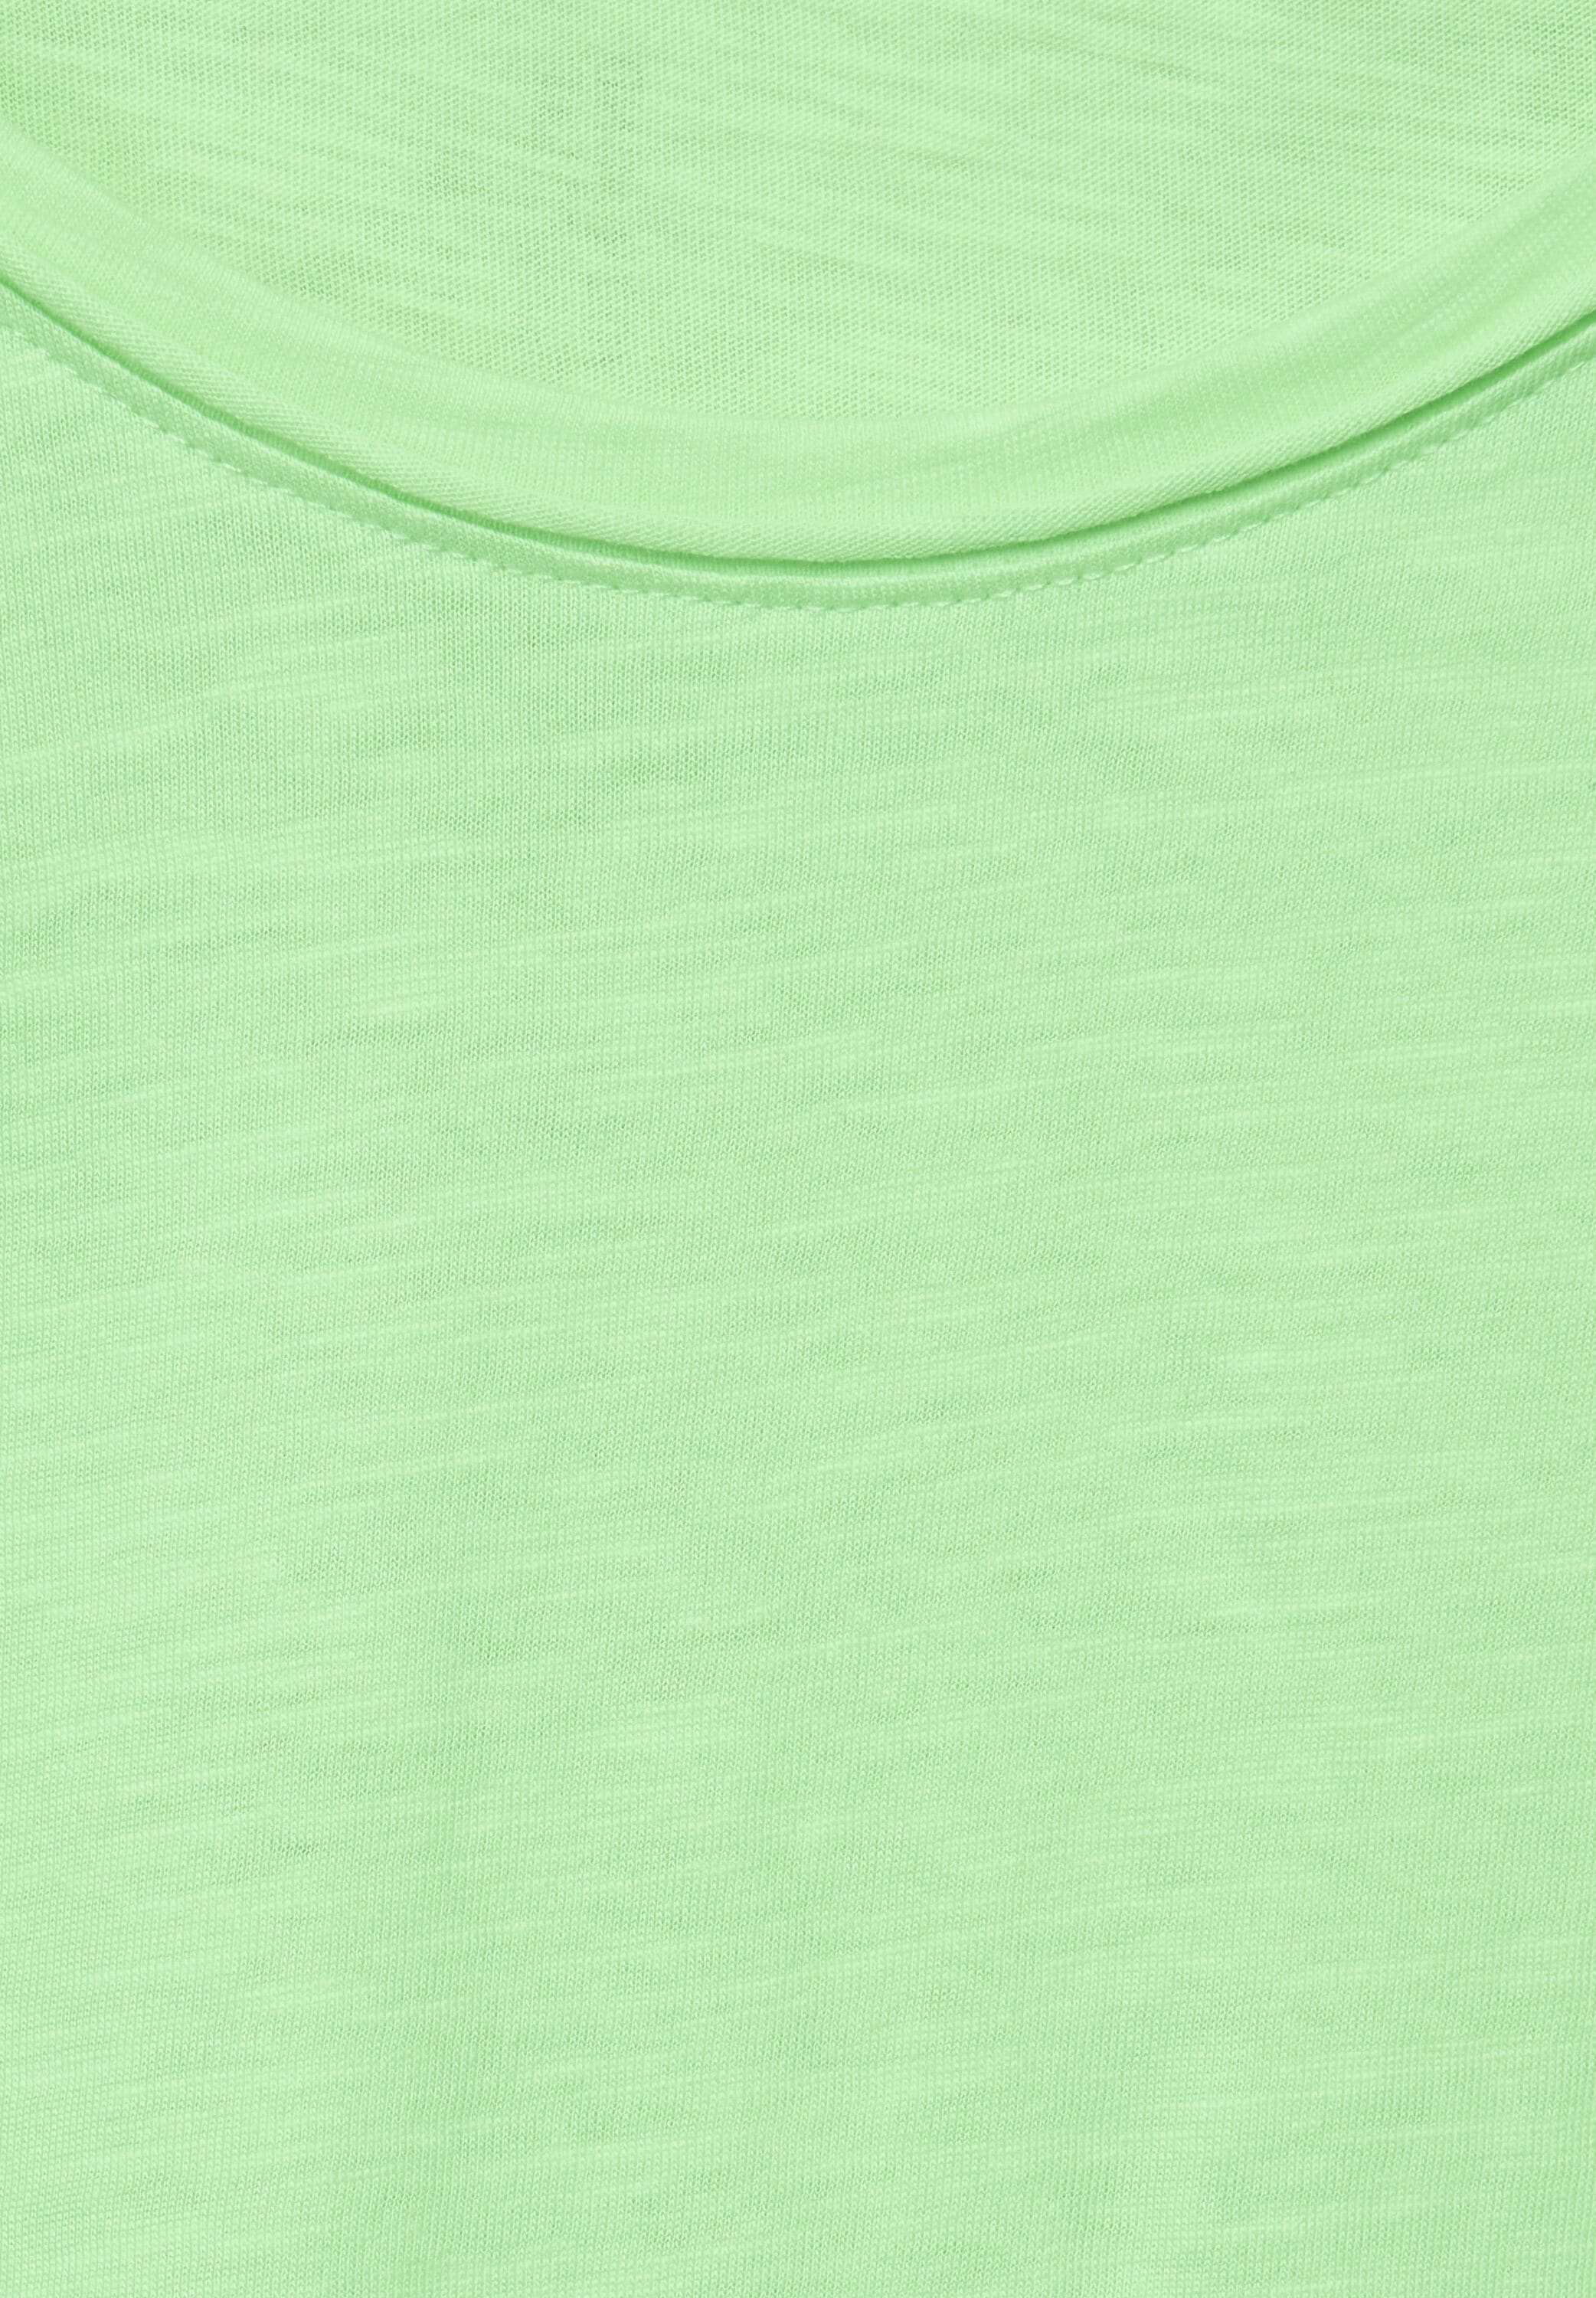 Cecil T-Shirt, mit Melange Optik